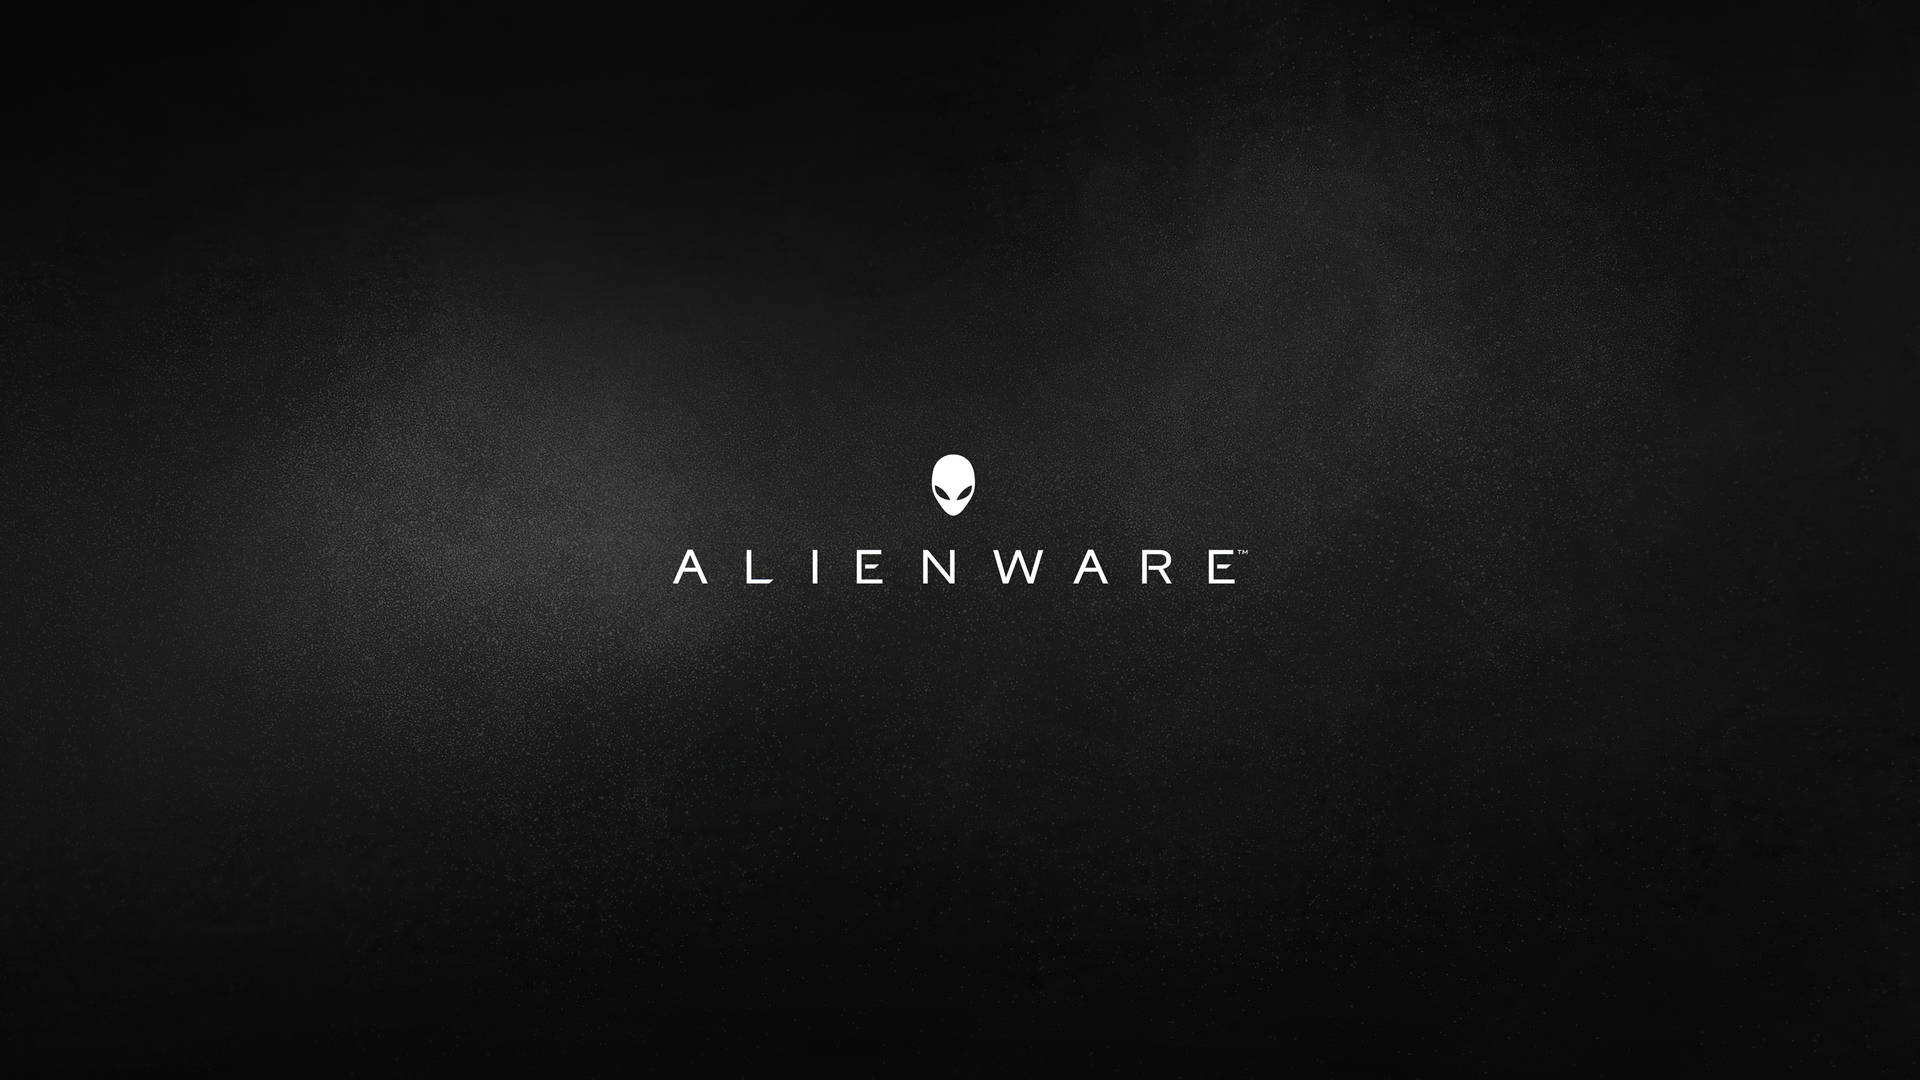 White Alienware In Smoky Black Background